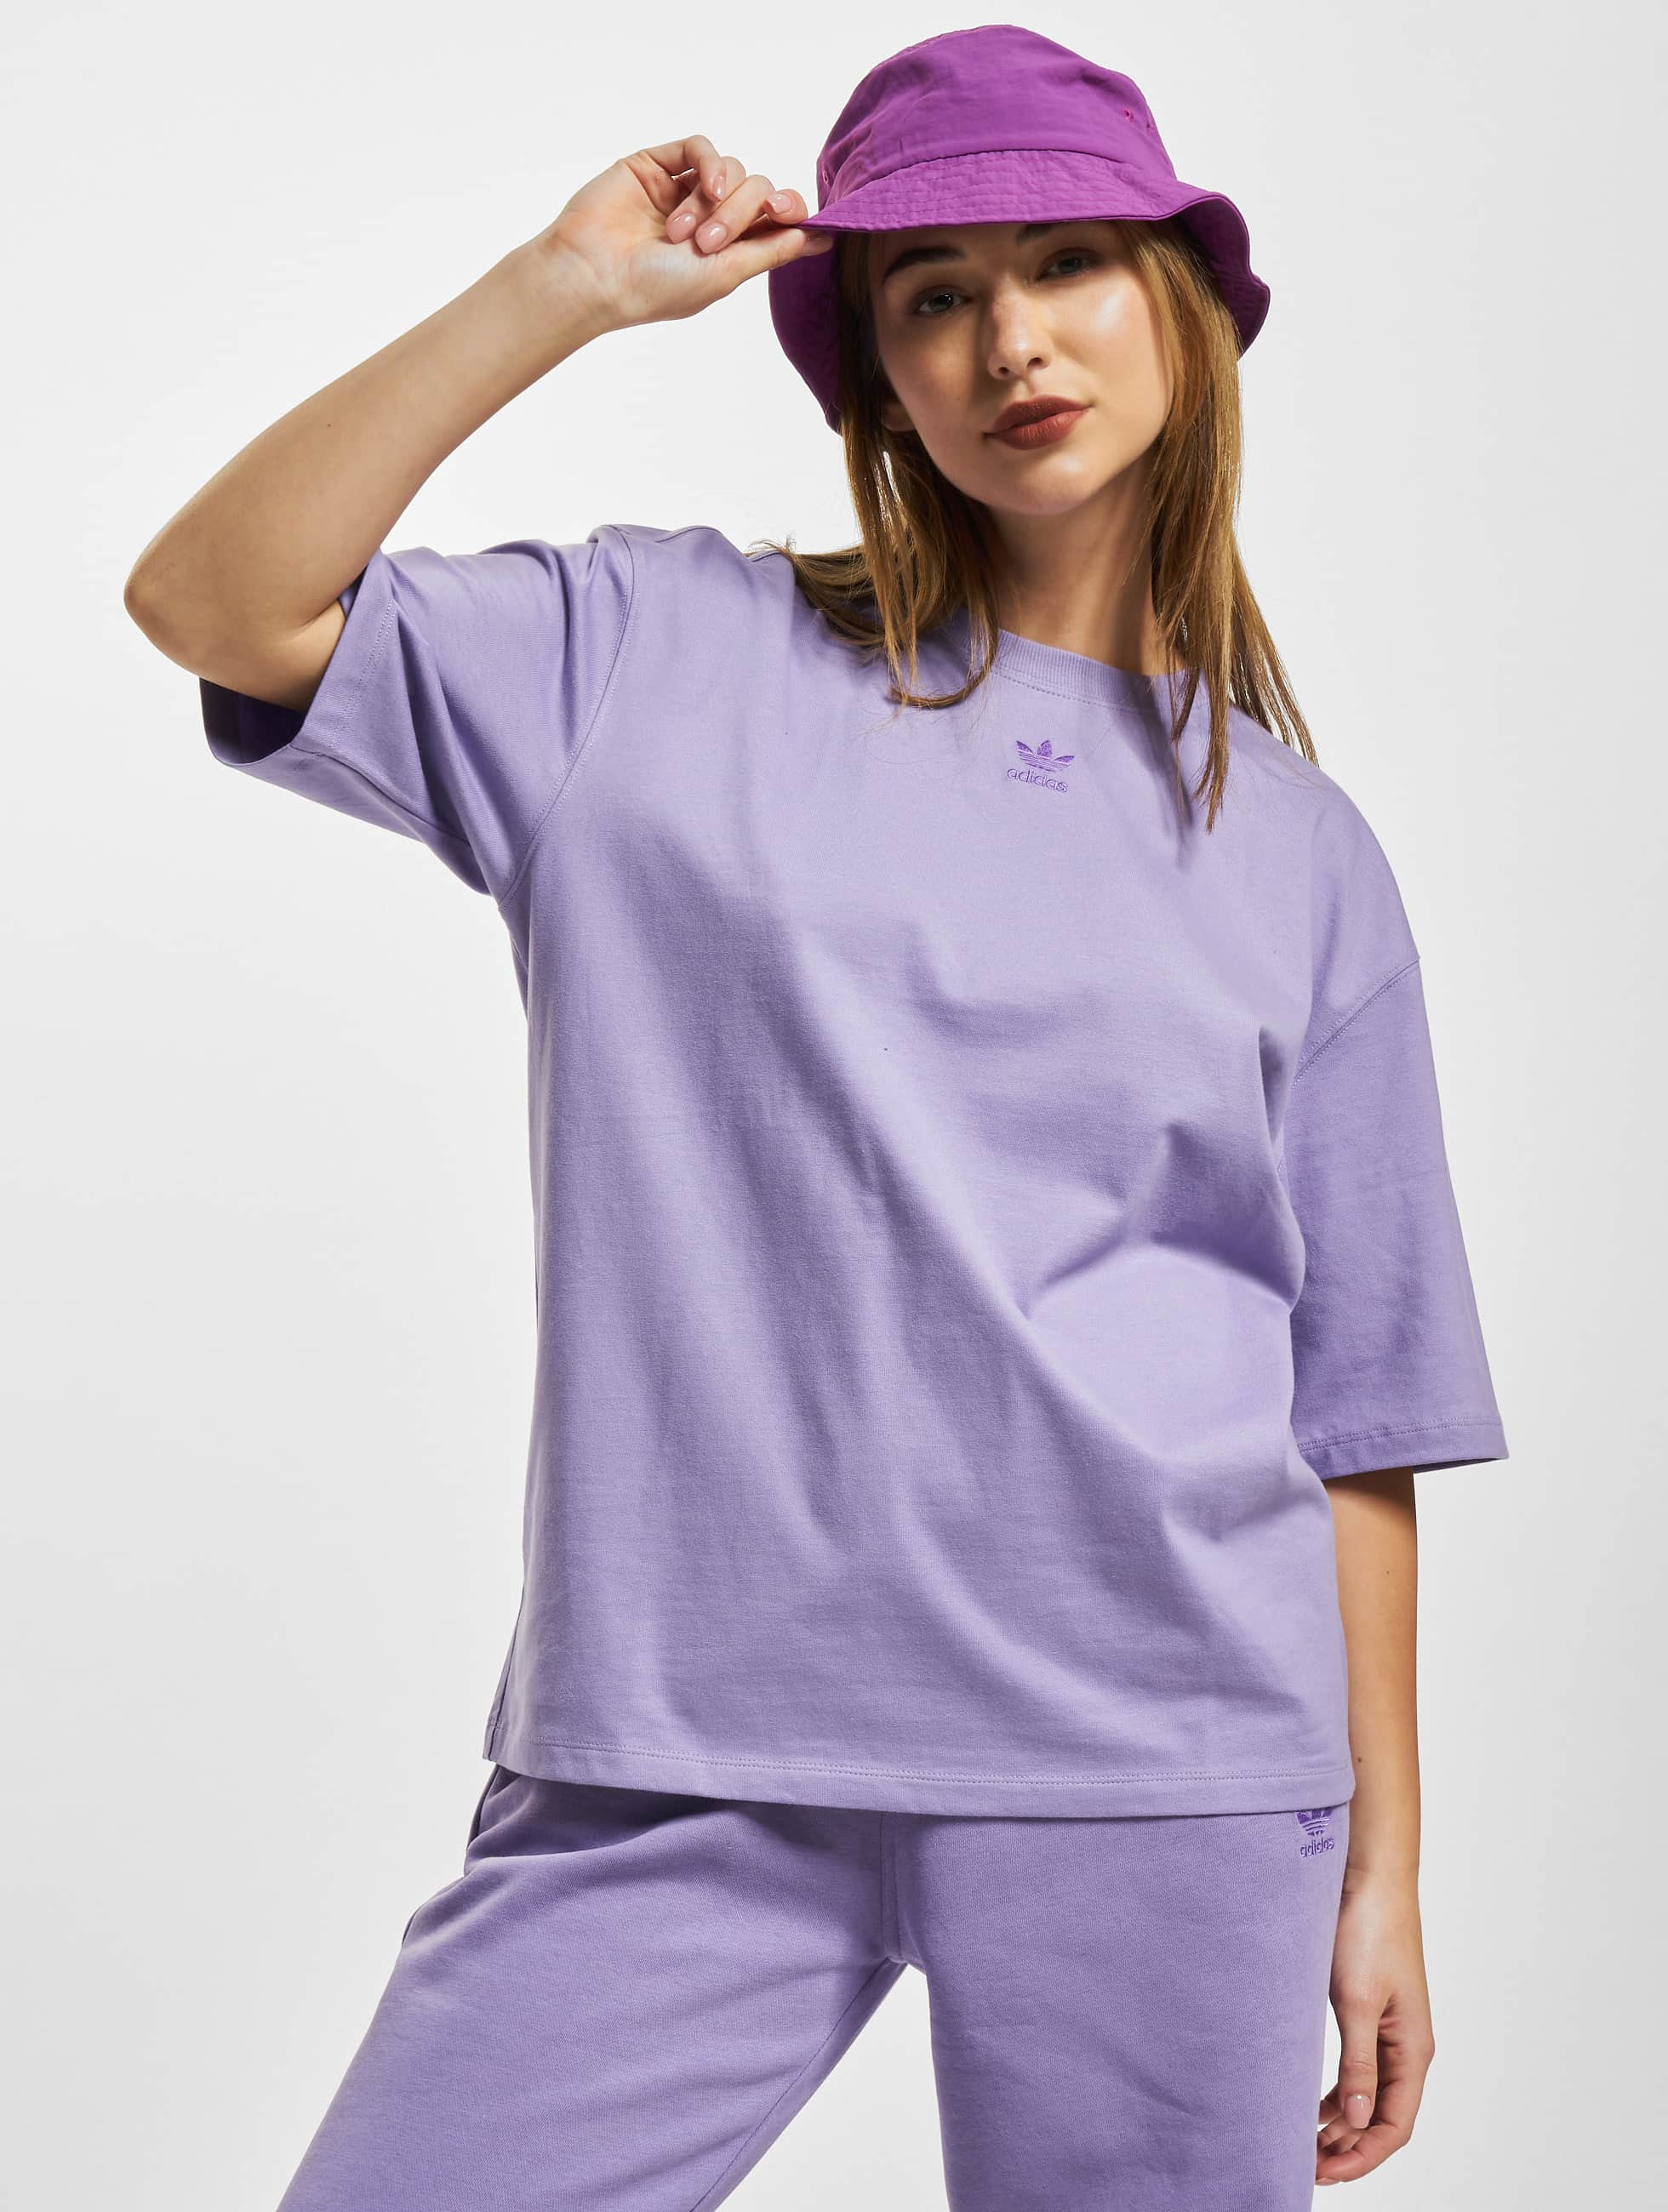 Overwear / T-Shirt Originals in purple 987990